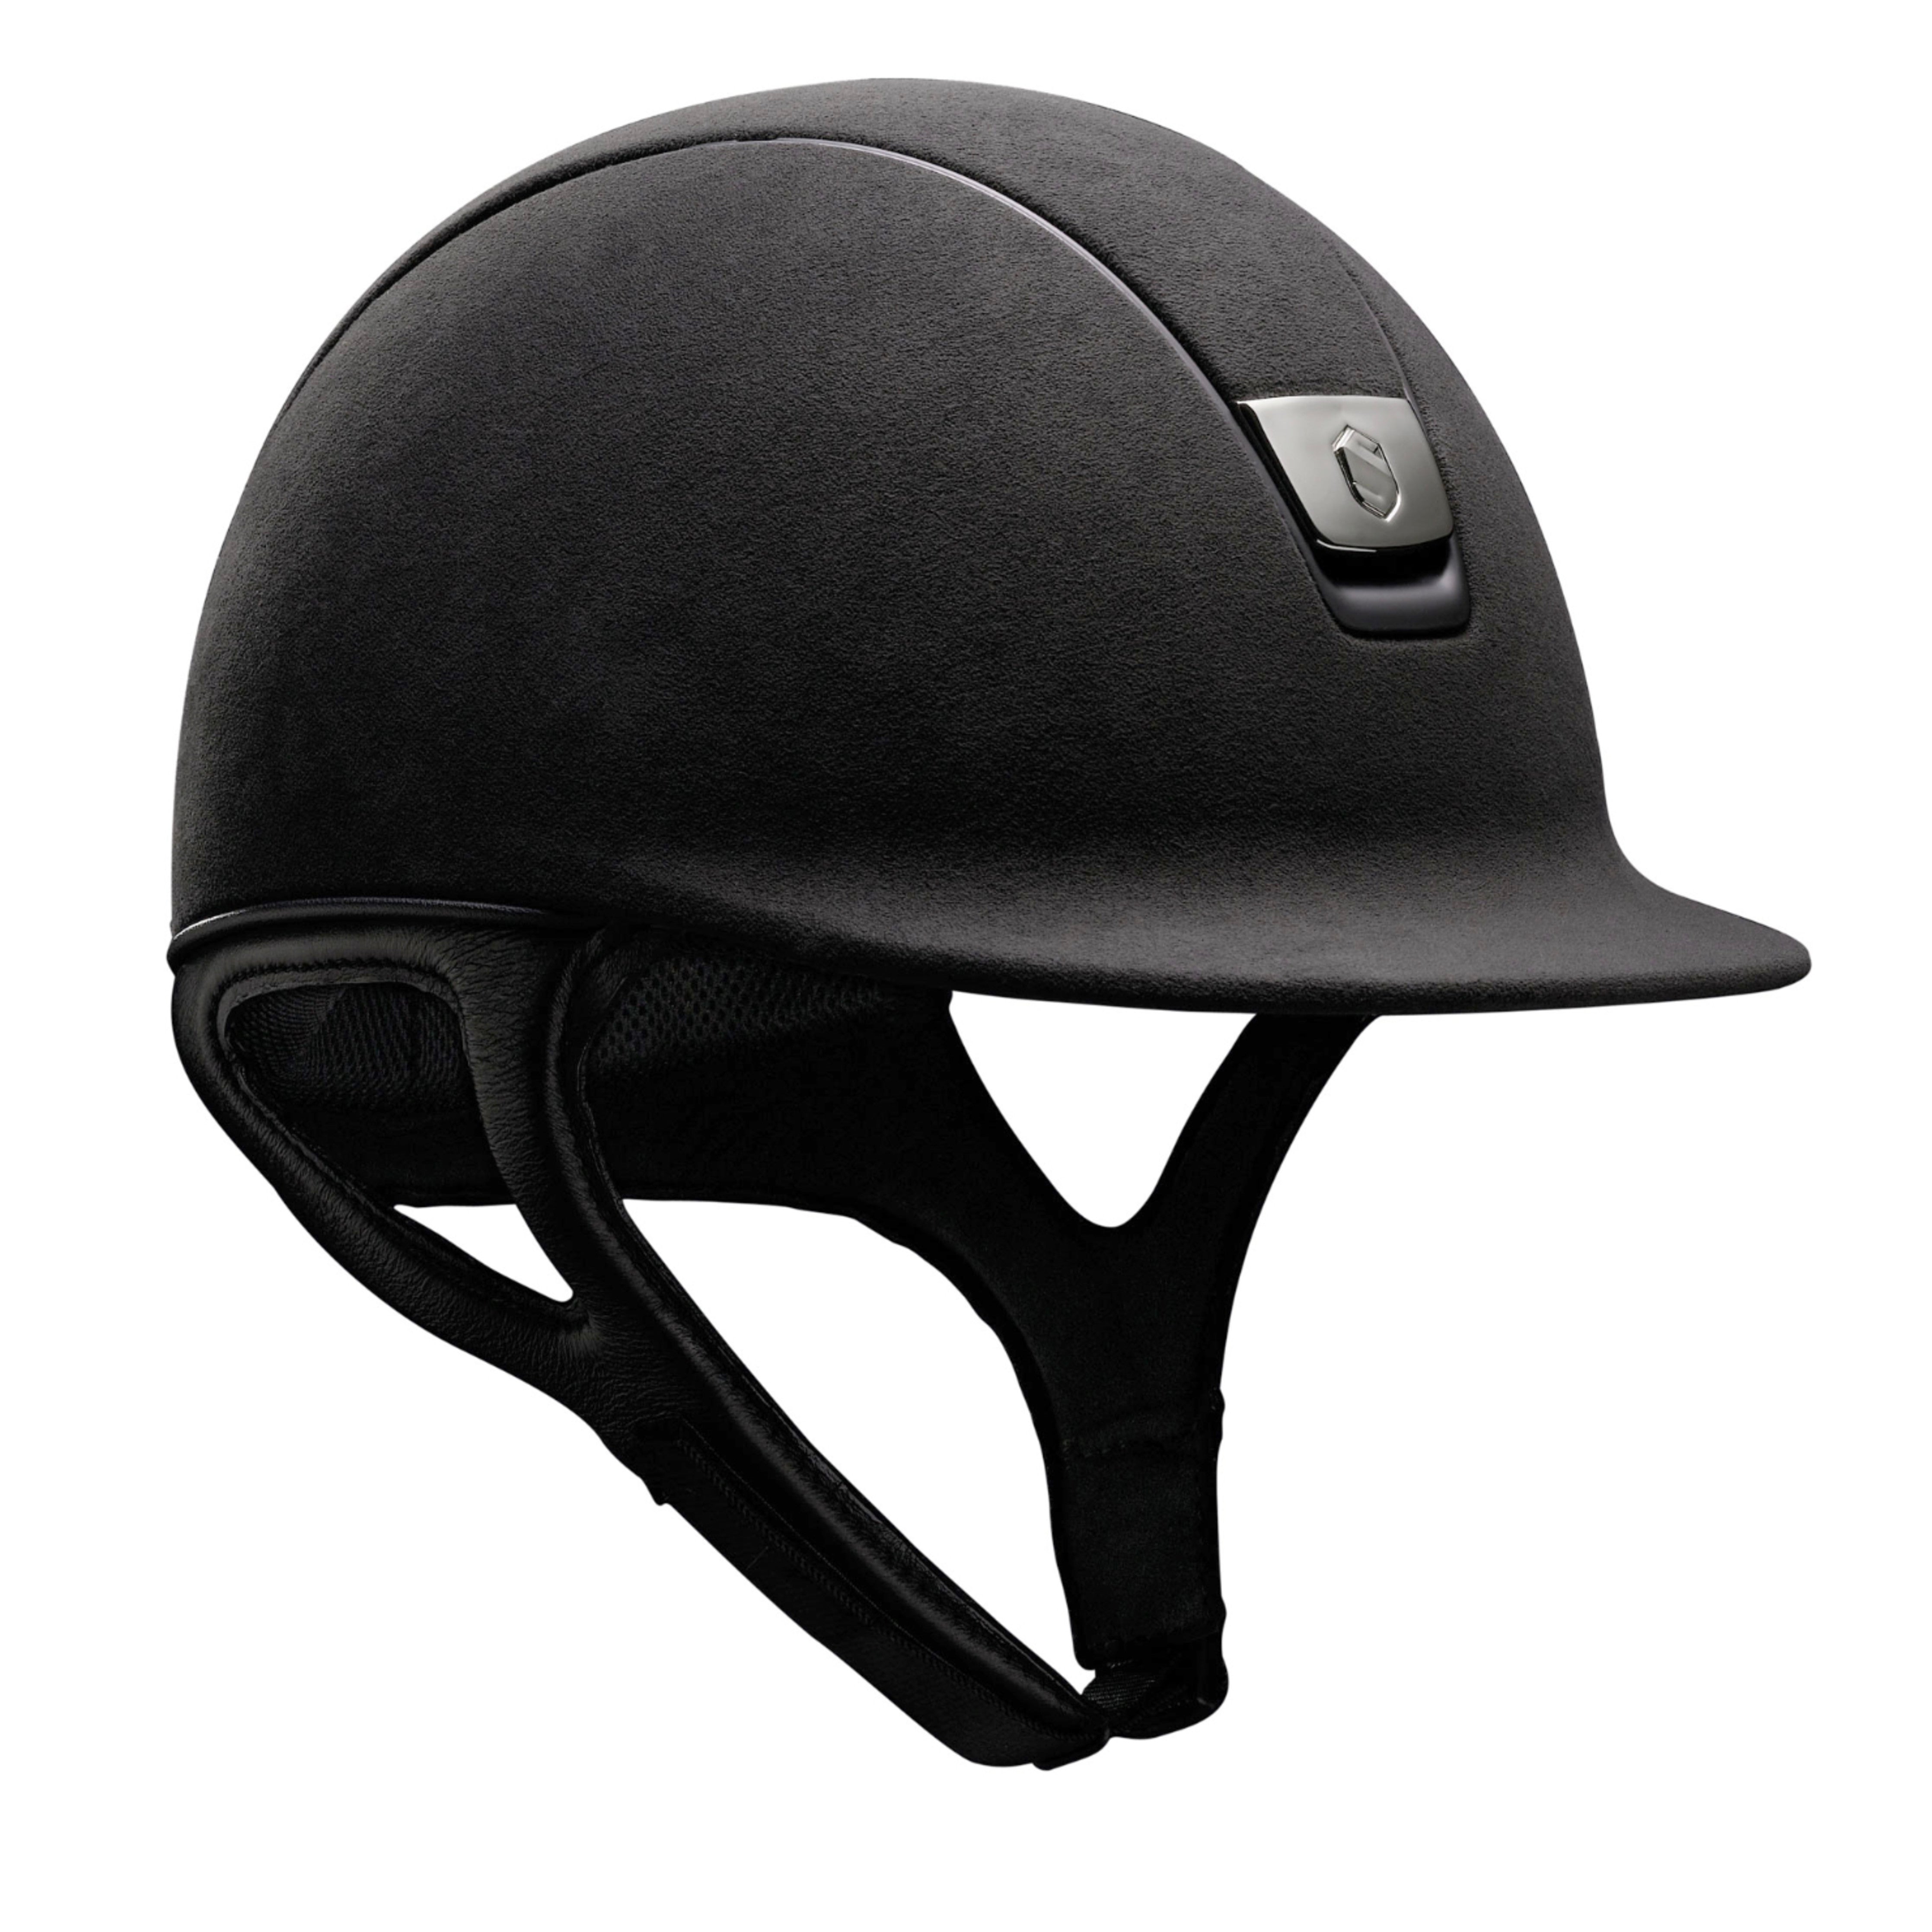 Samshield 1.0 Premium Helmet